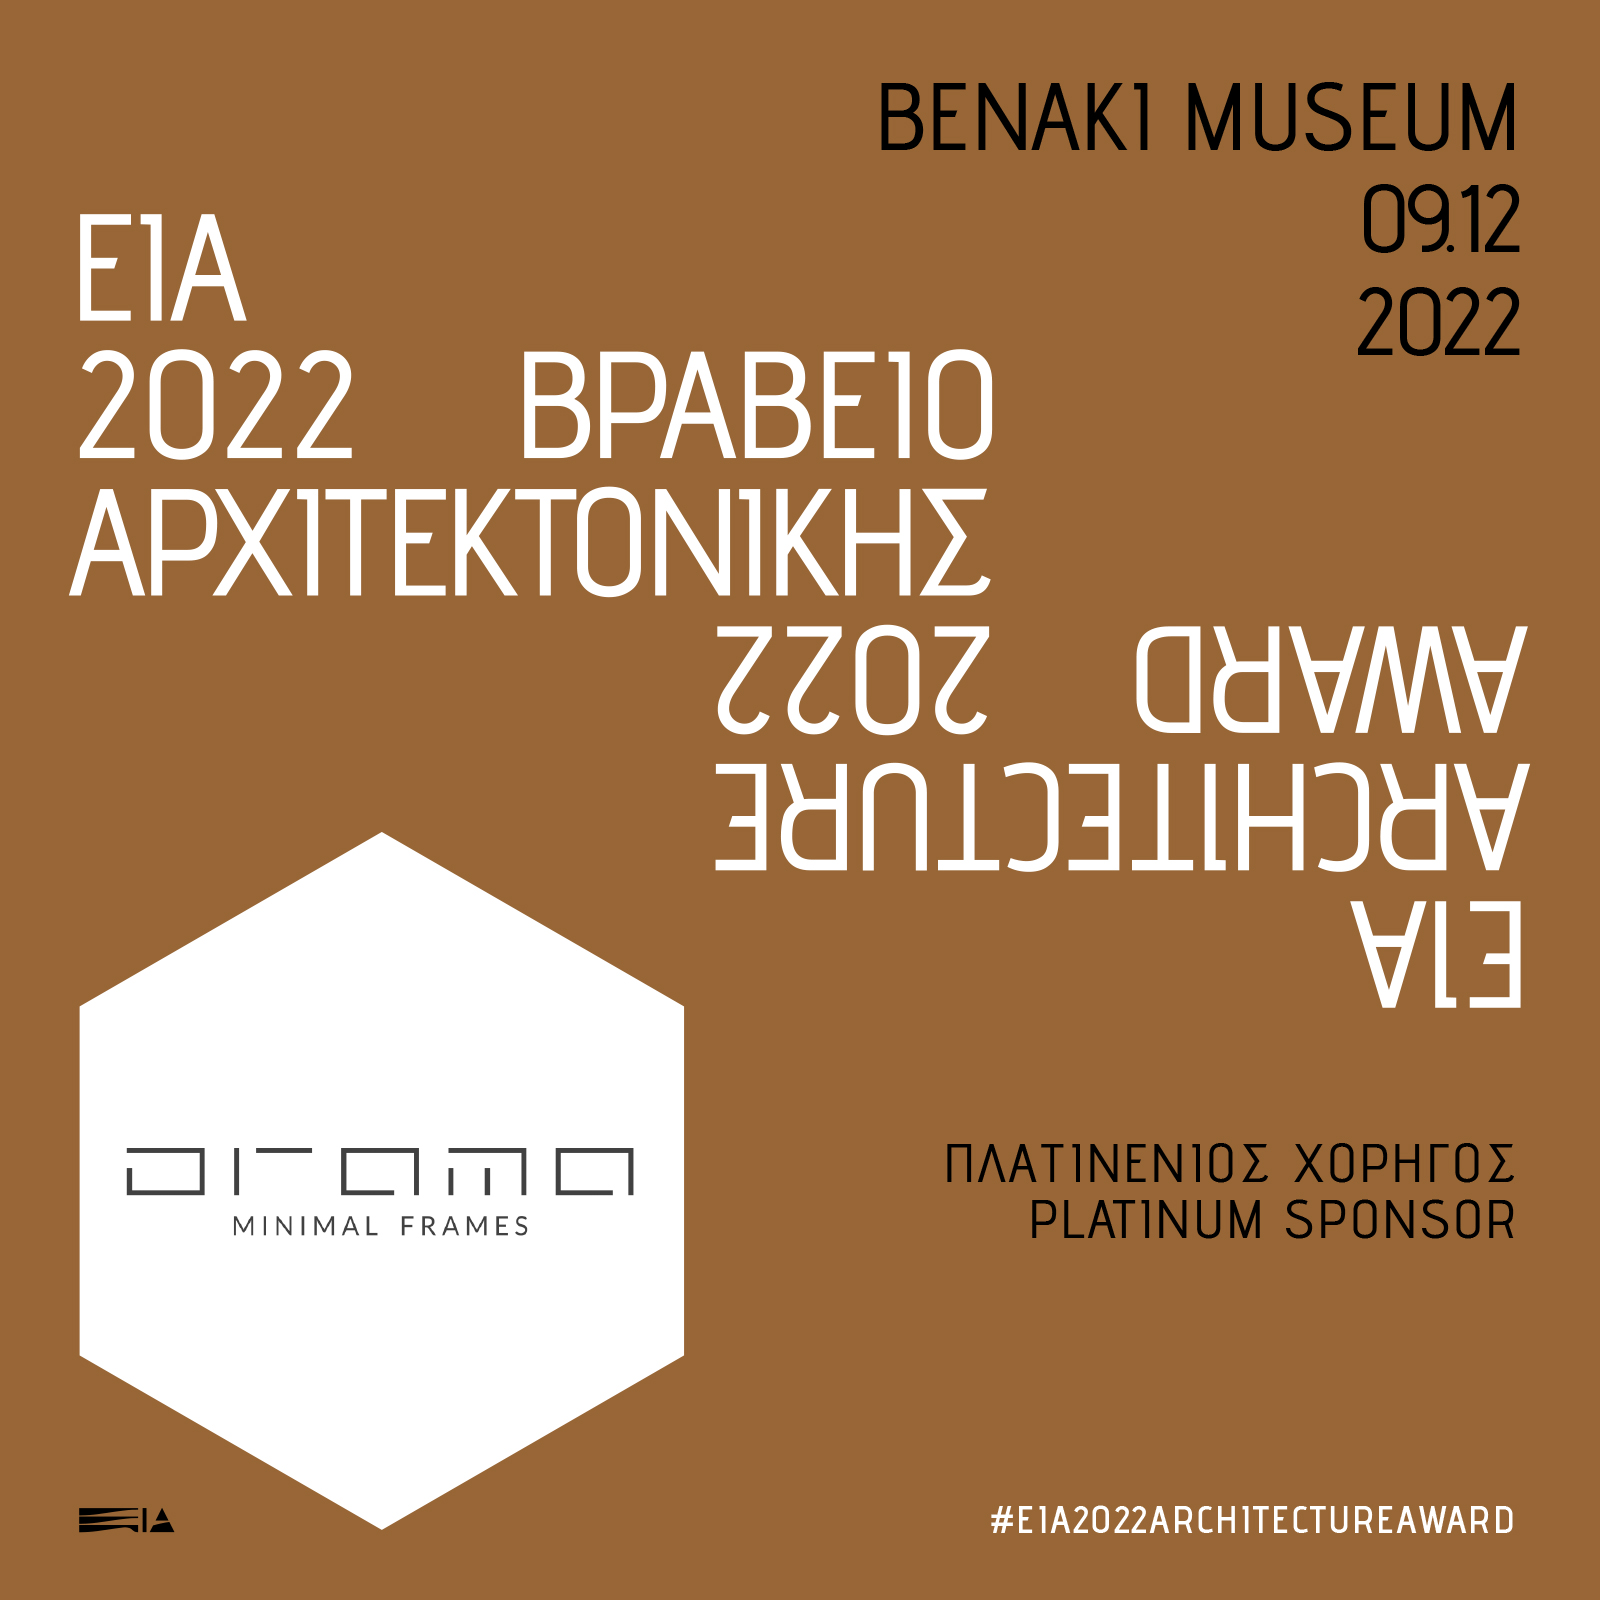 Orama is platinum sponsor at EIA 2022 Architecture Award